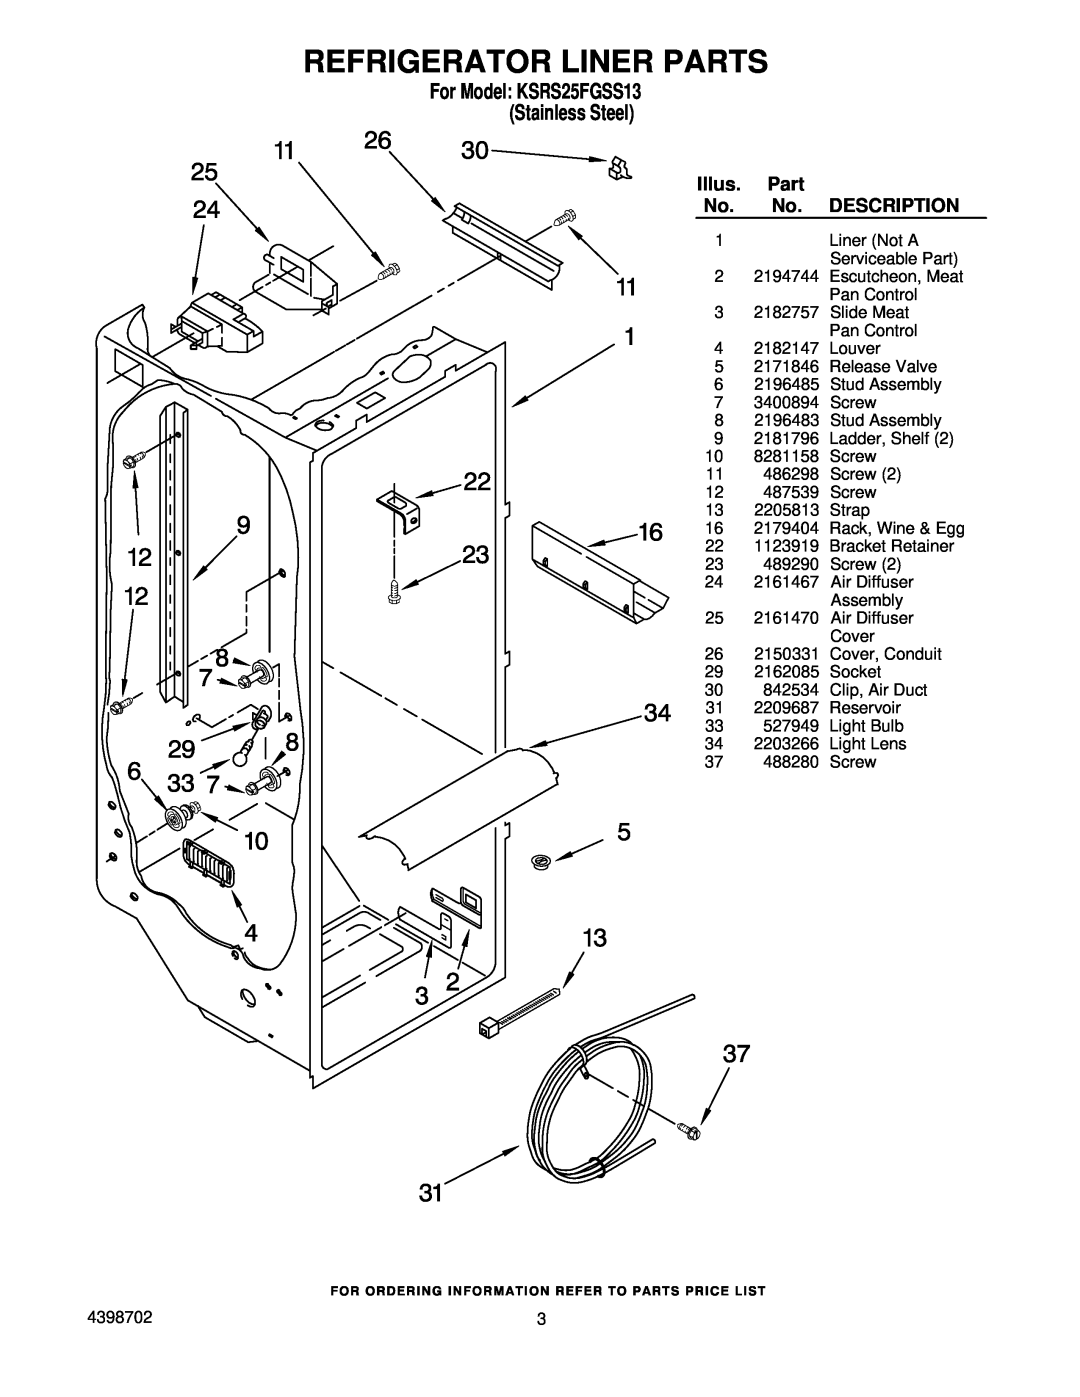 KitchenAid manual Refrigerator Liner Parts, For Model KSRS25FGSS13 Stainless Steel, Illus, Description 